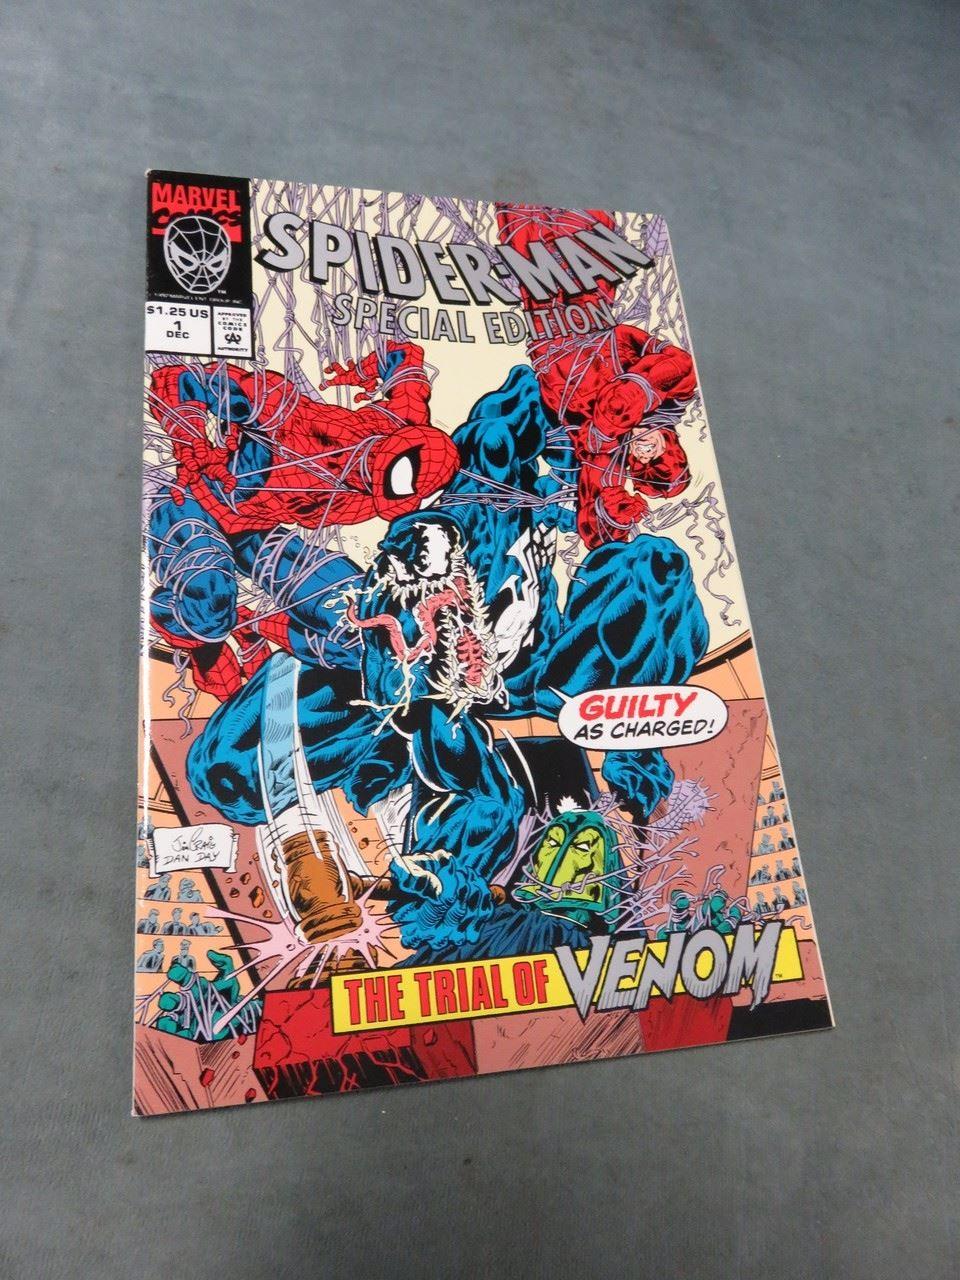 Spider-Man Special Edition #1/1992